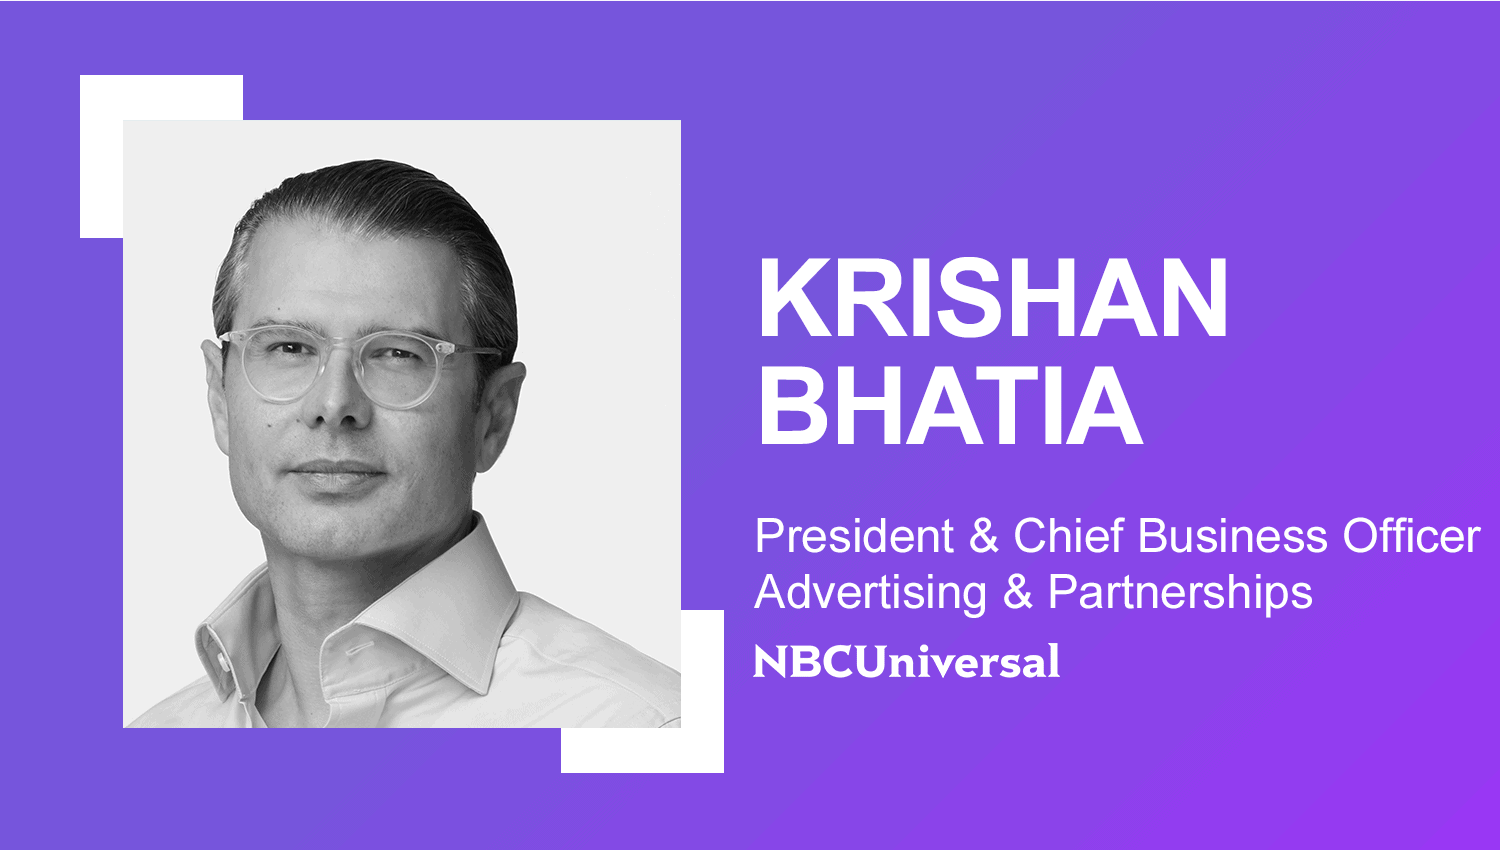 Krishan Bhatia